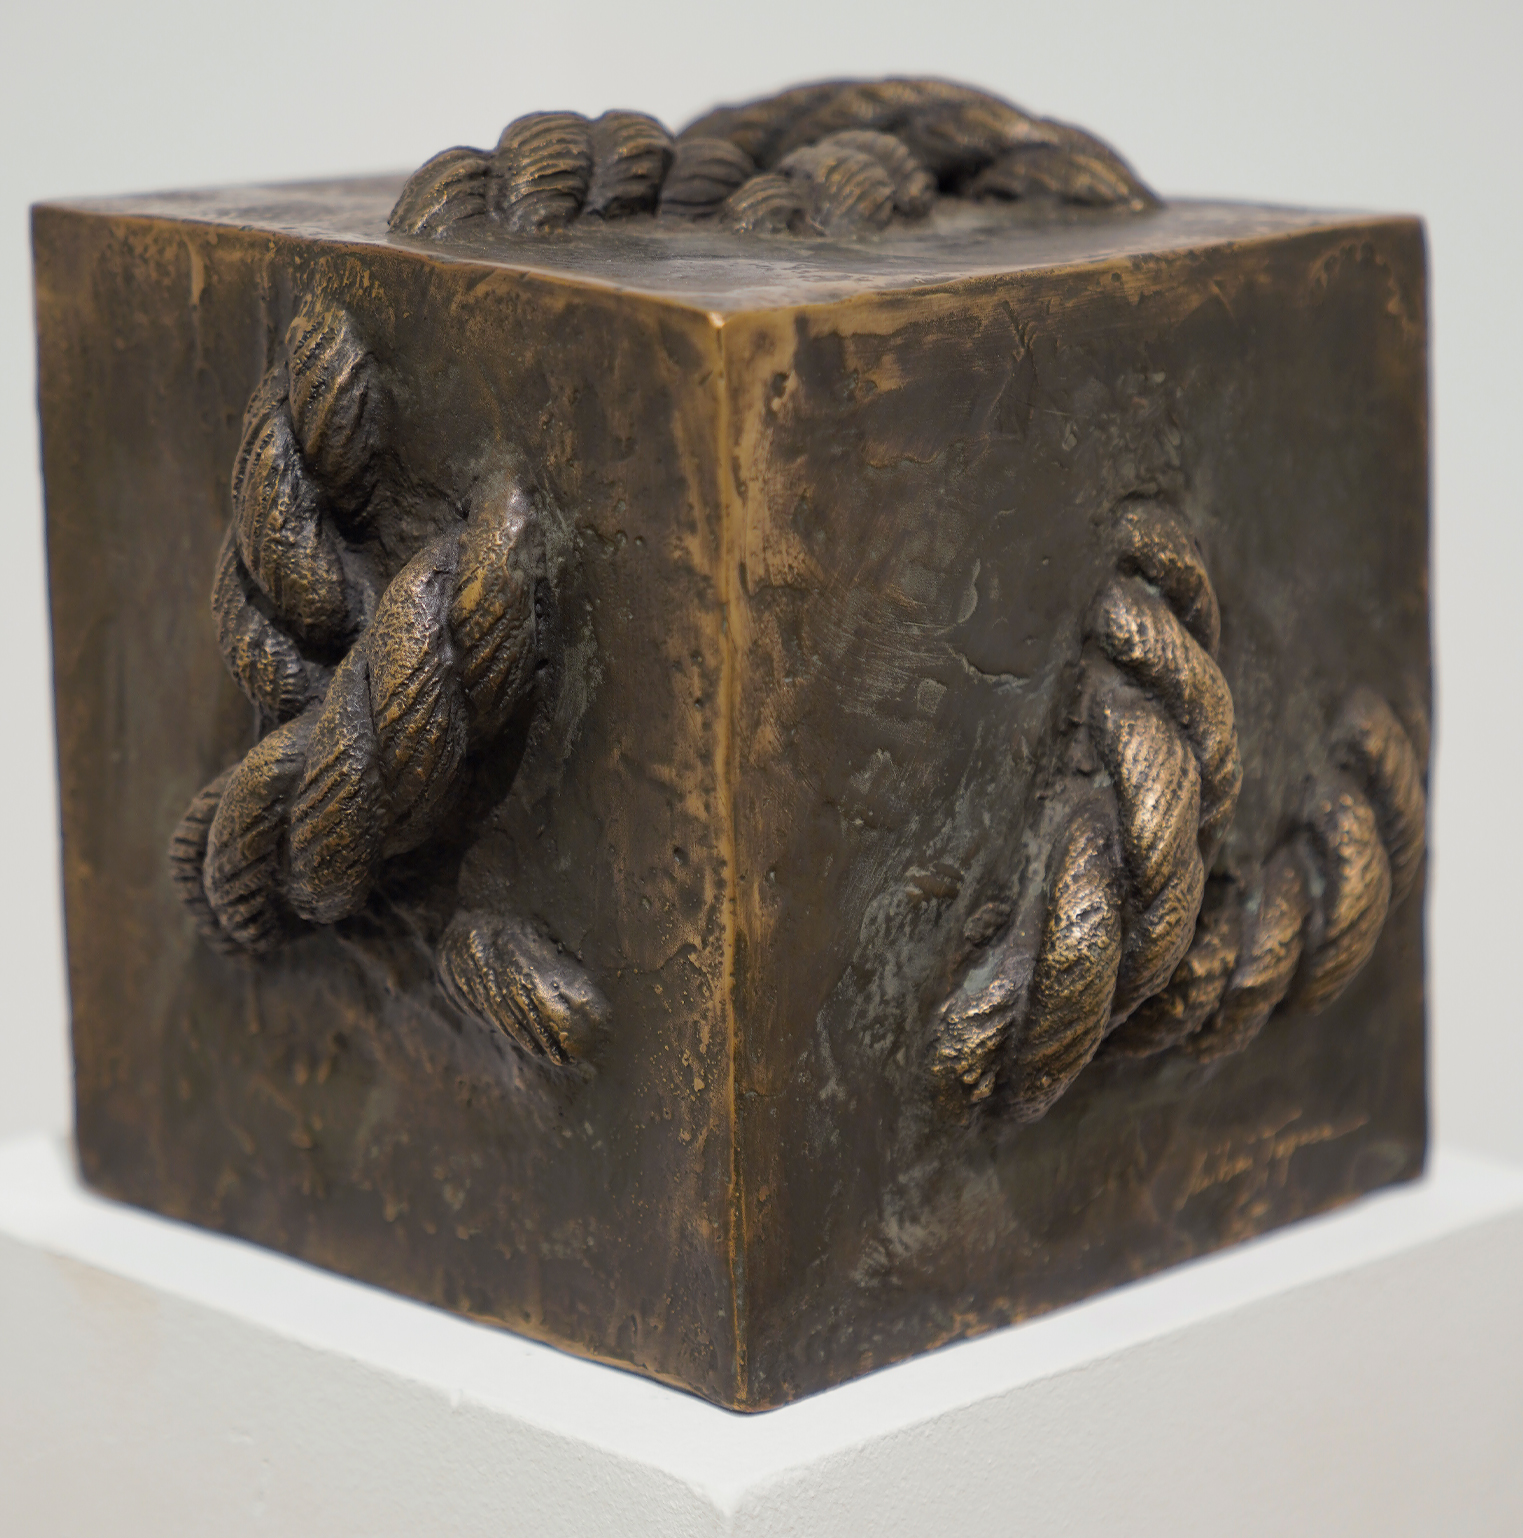 Mihai Țopescu Captive Energies, bronz, 24 x 27 x 26 cm